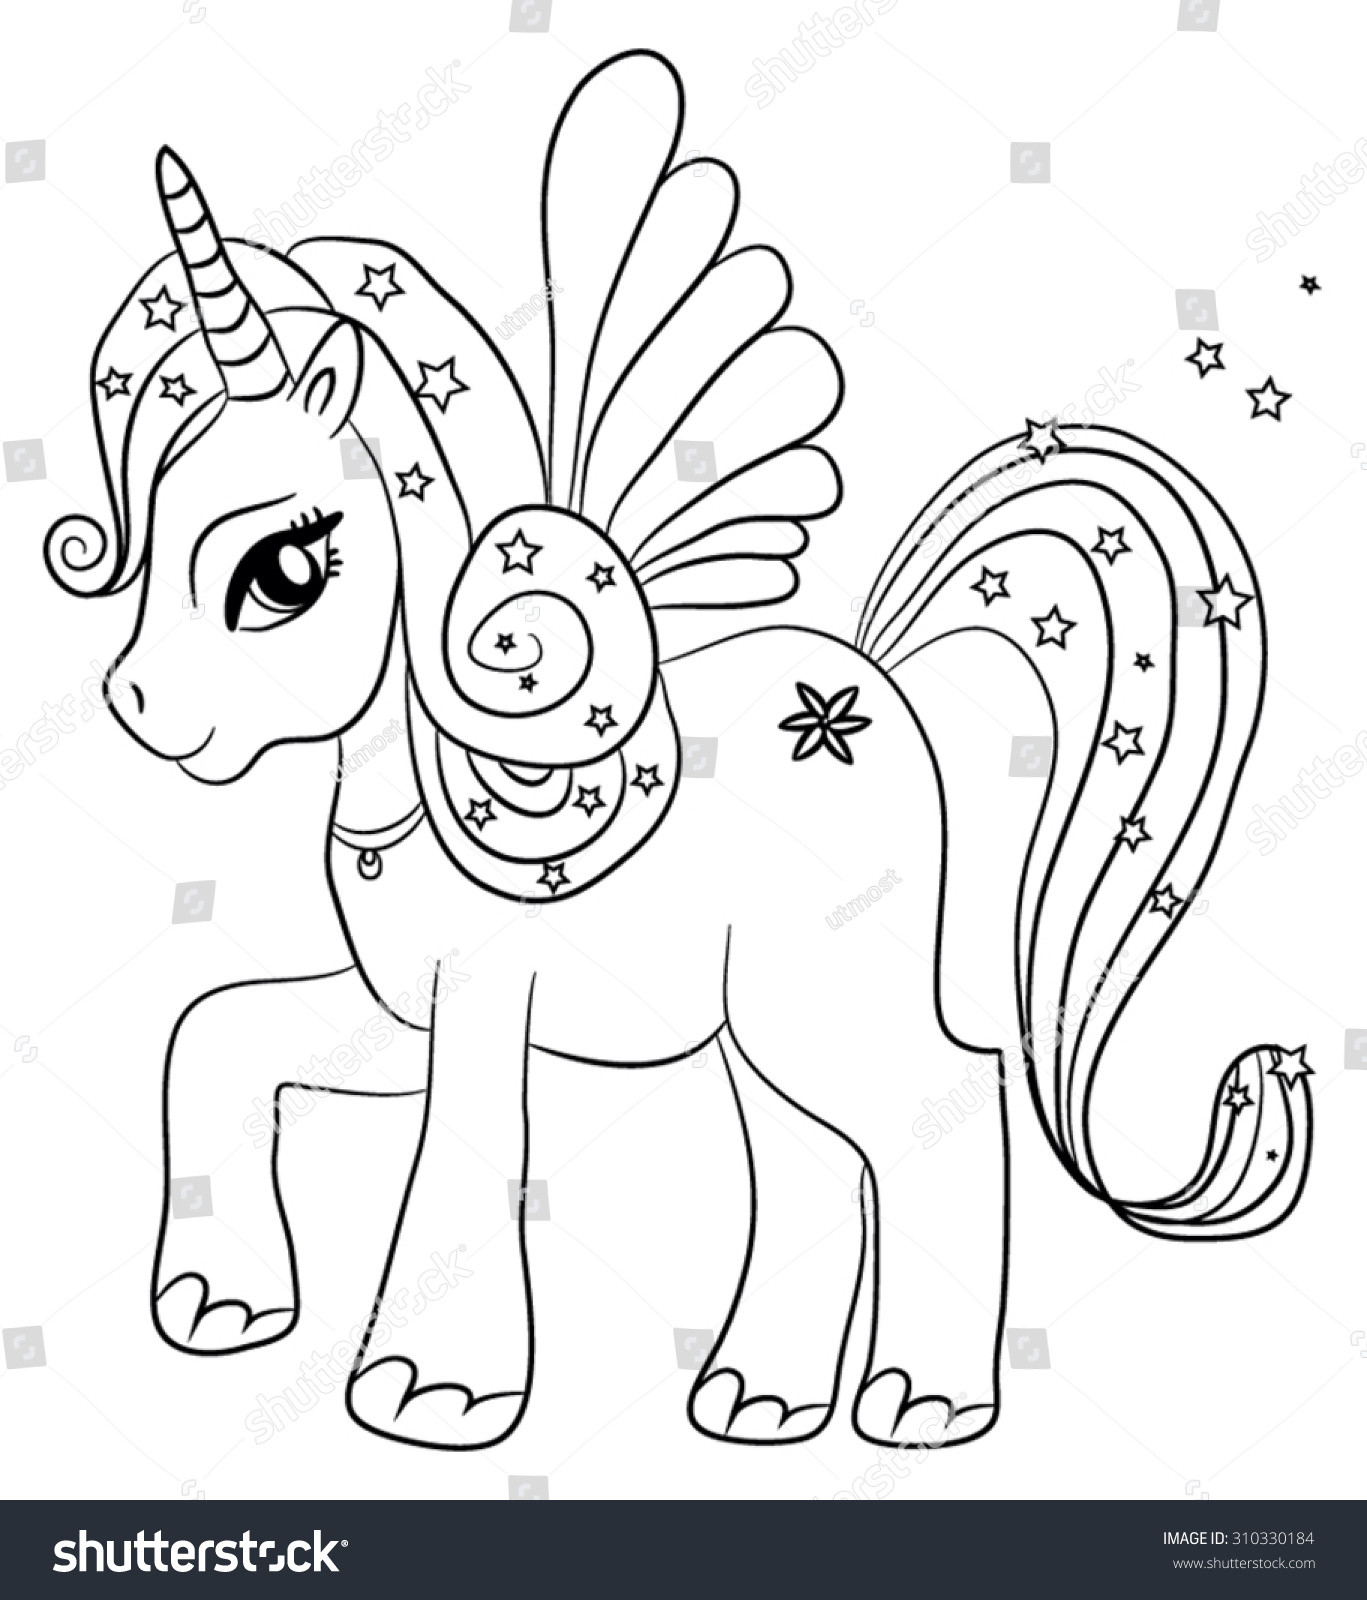 Kids Coloring Page Unicorn
 Cute Cartoon Fairytale Unicorn Coloring Page For Kids